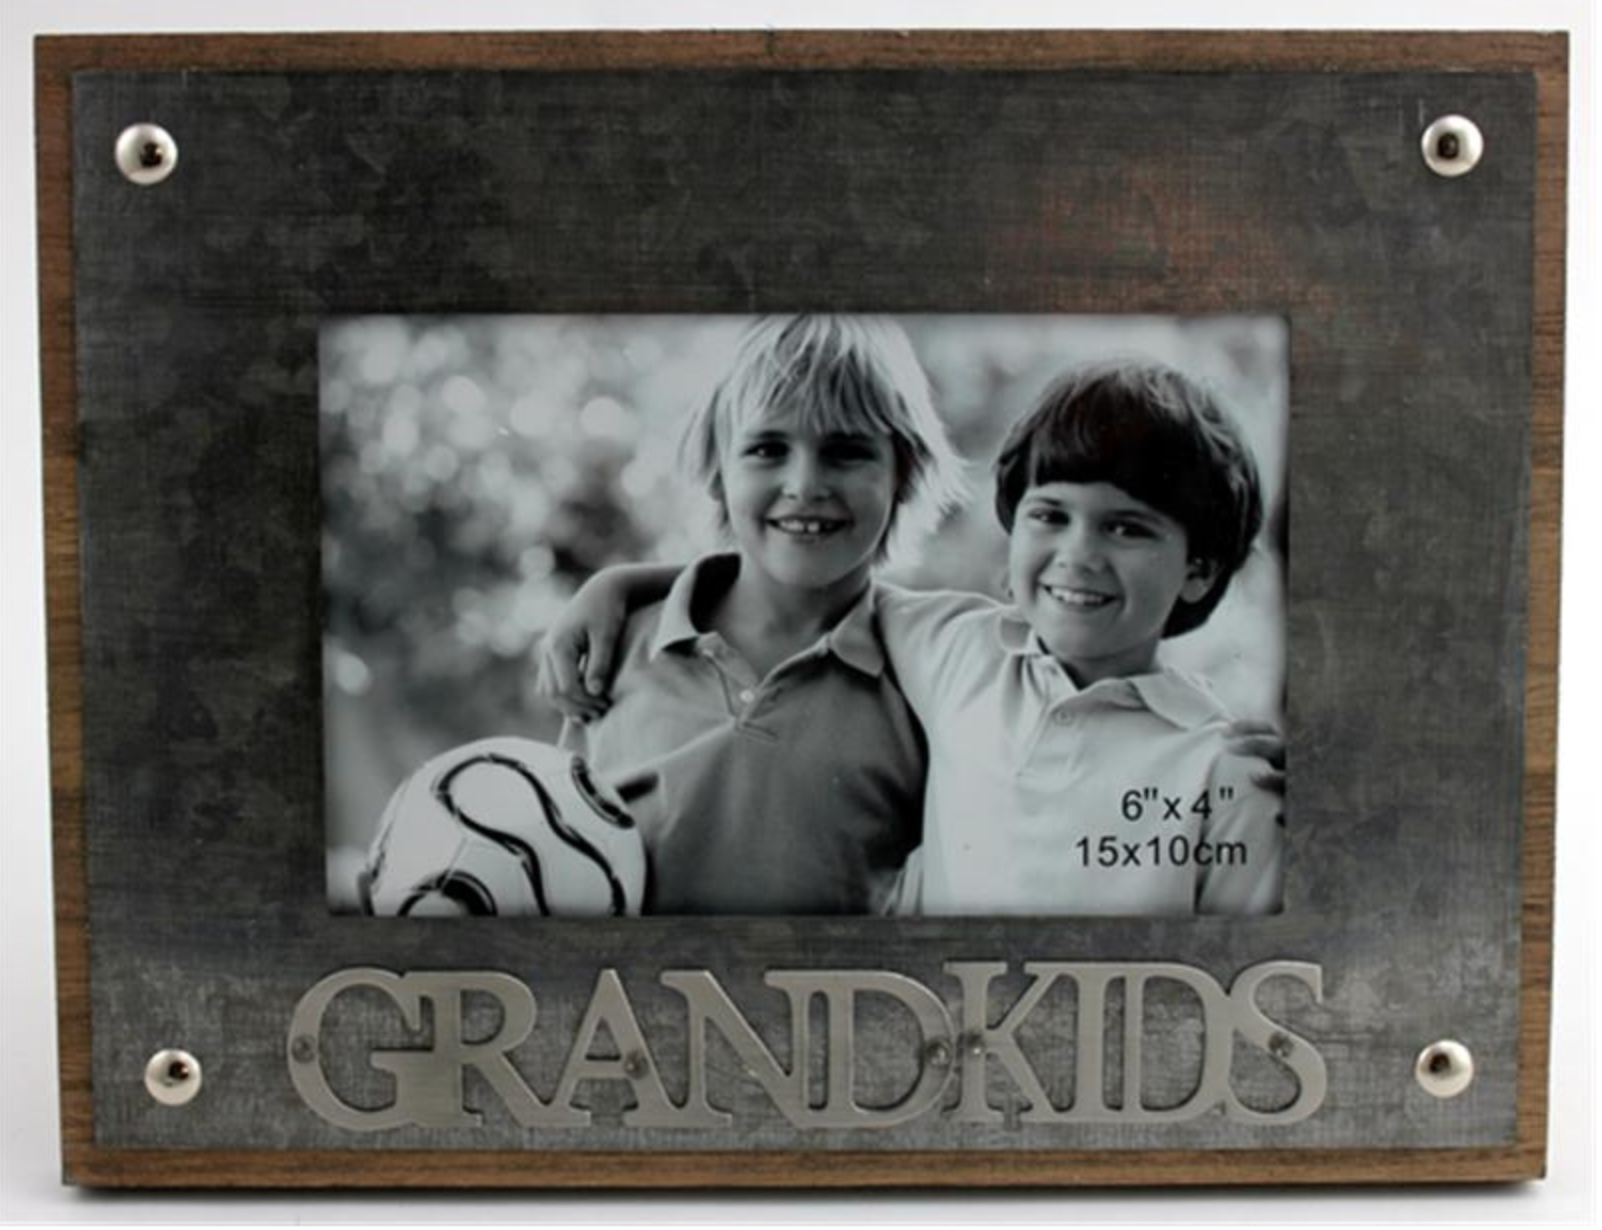 Grandkids Frame